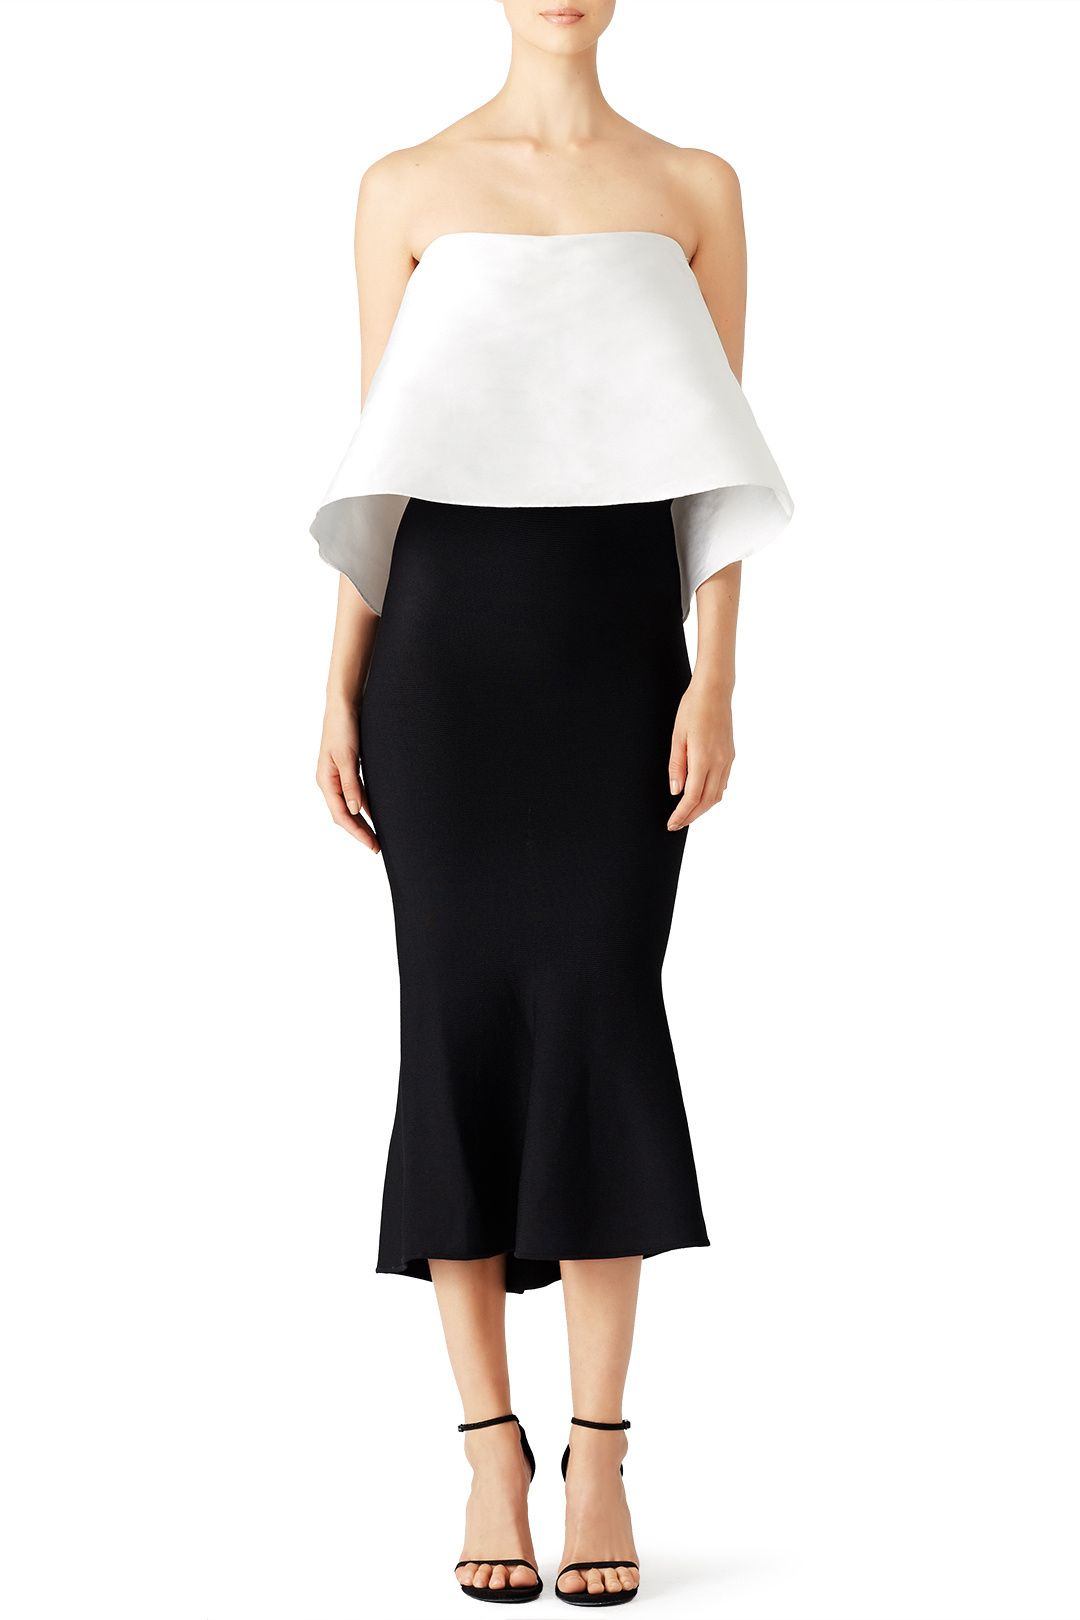 A black dress with a white peplum top